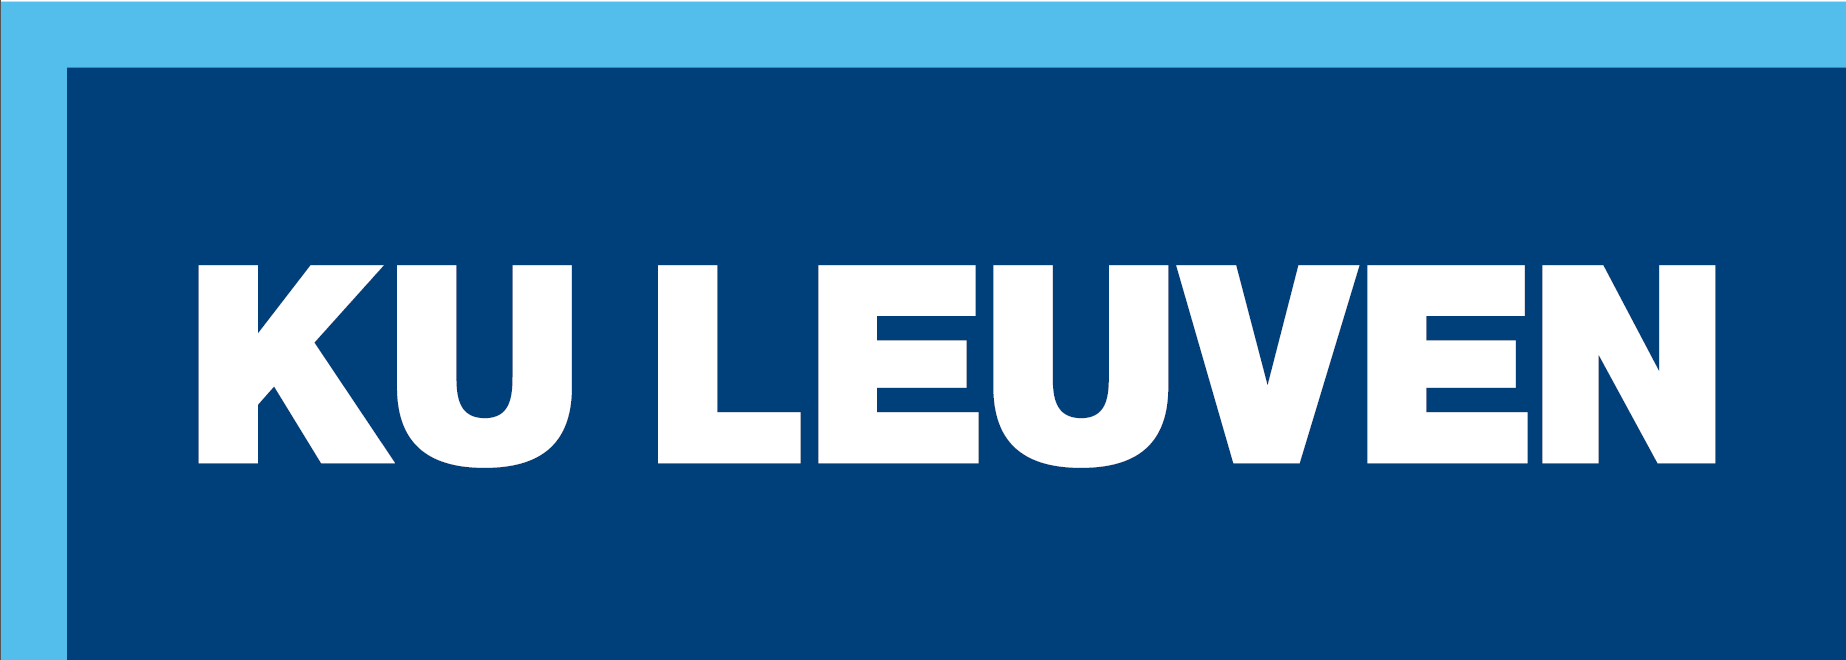 Catholic U Logo - KU Leuven the outstanding